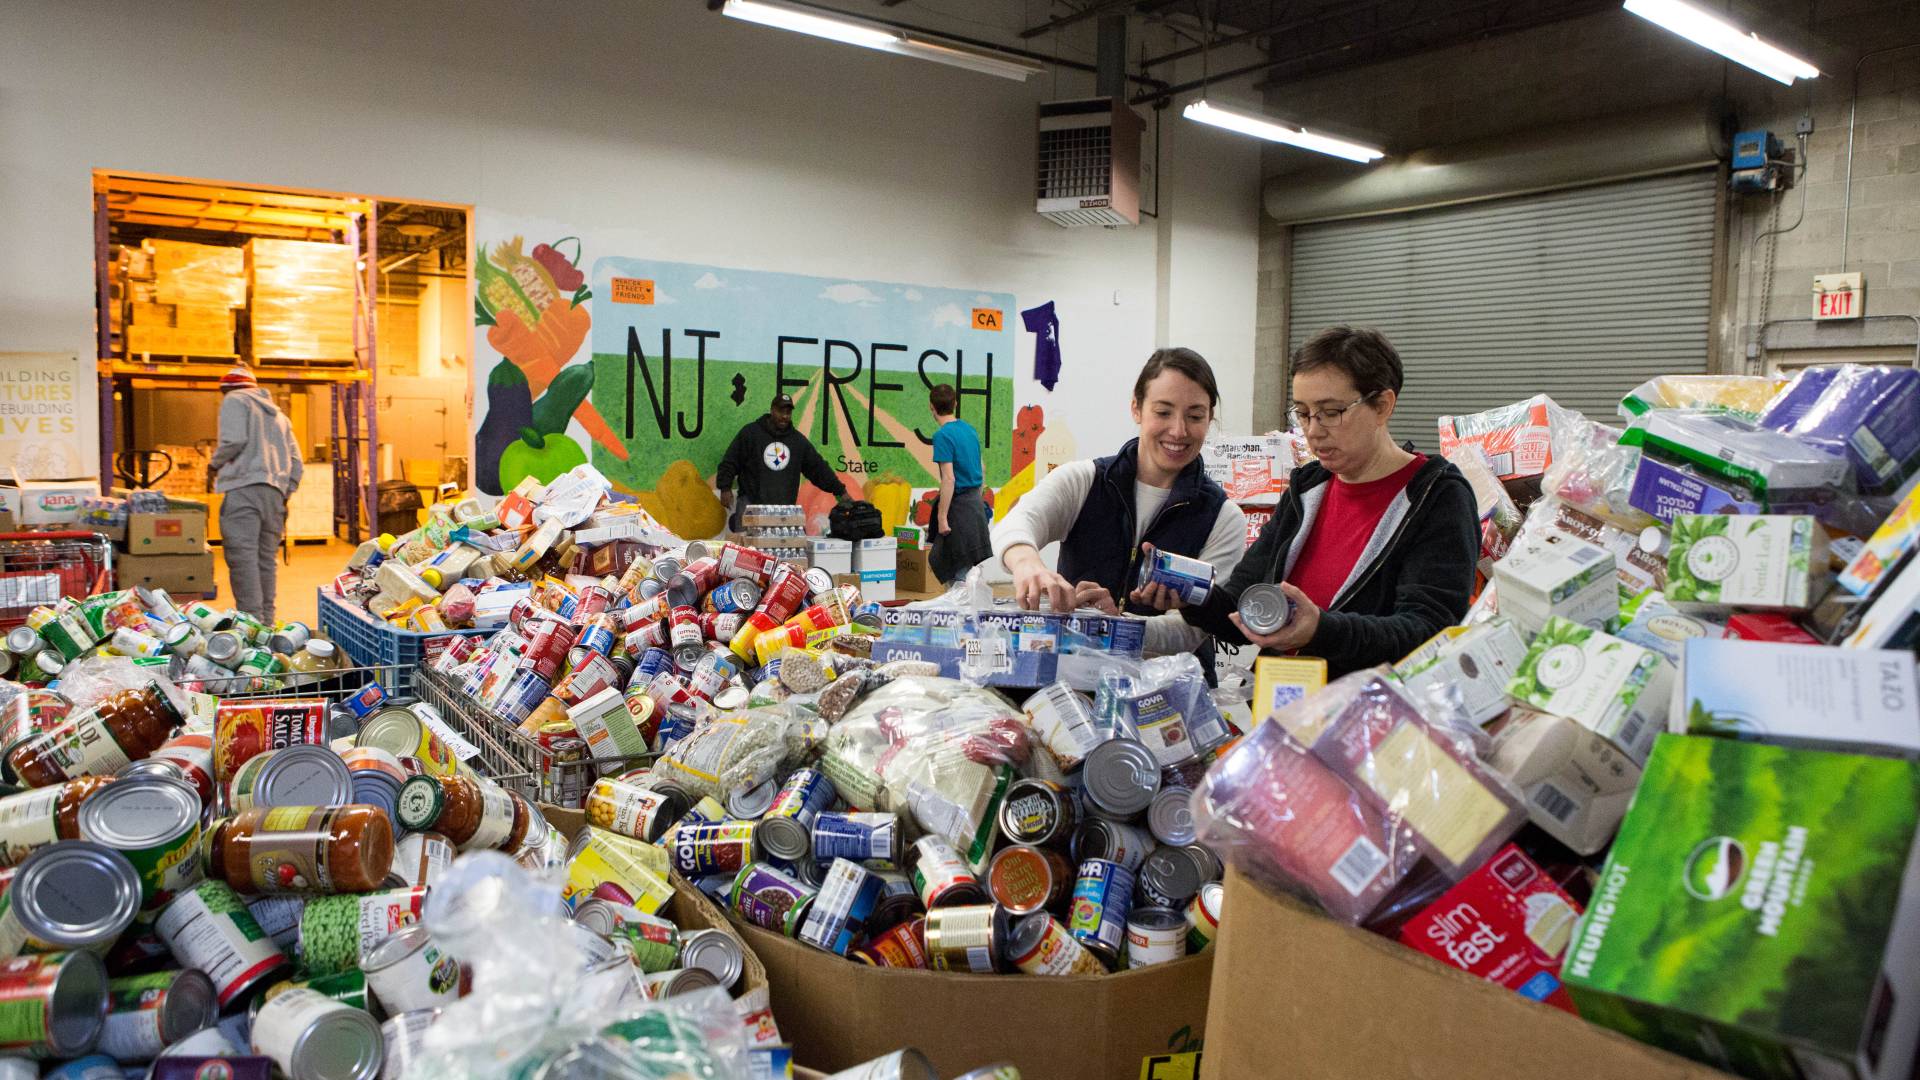 Princeton University staff sort items at Mercer St Friends Food Bank